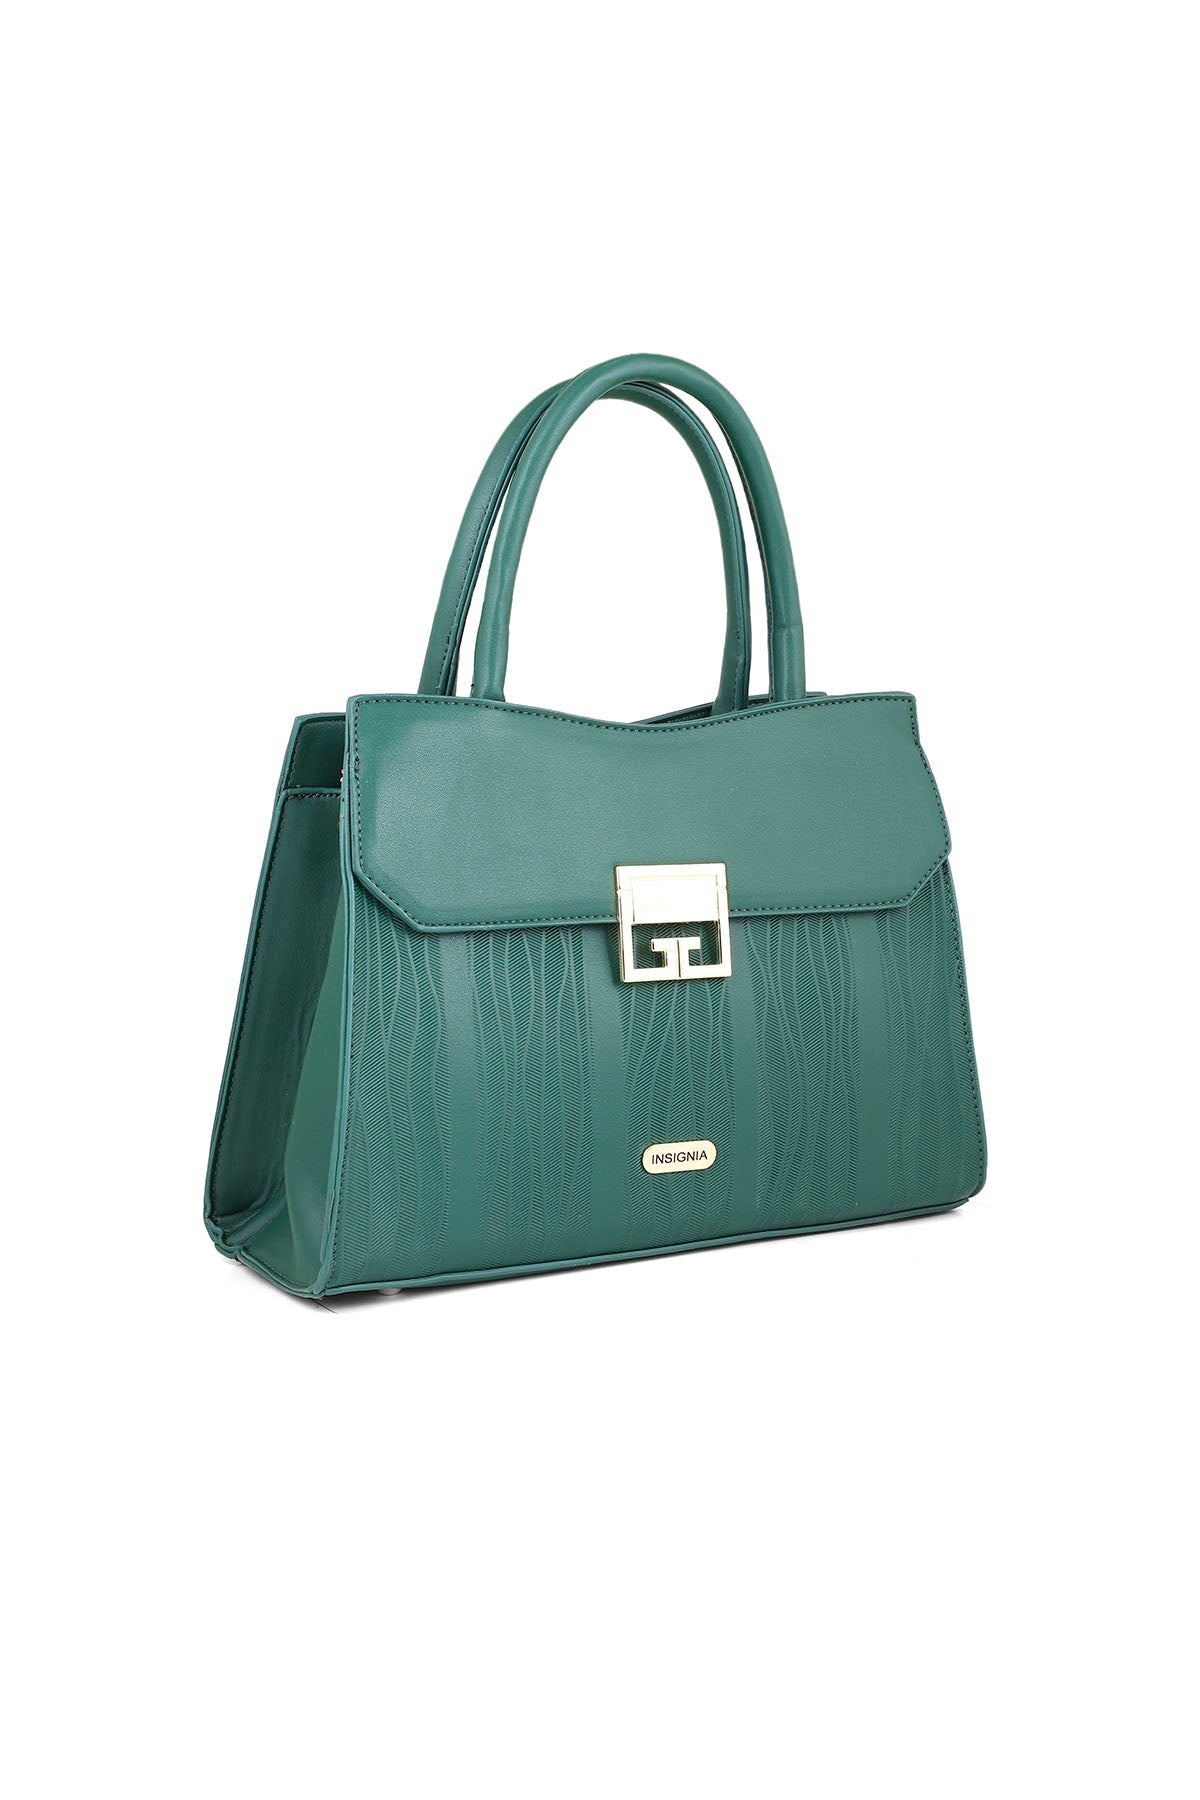 Top Handle Hand Bags B15132-Green